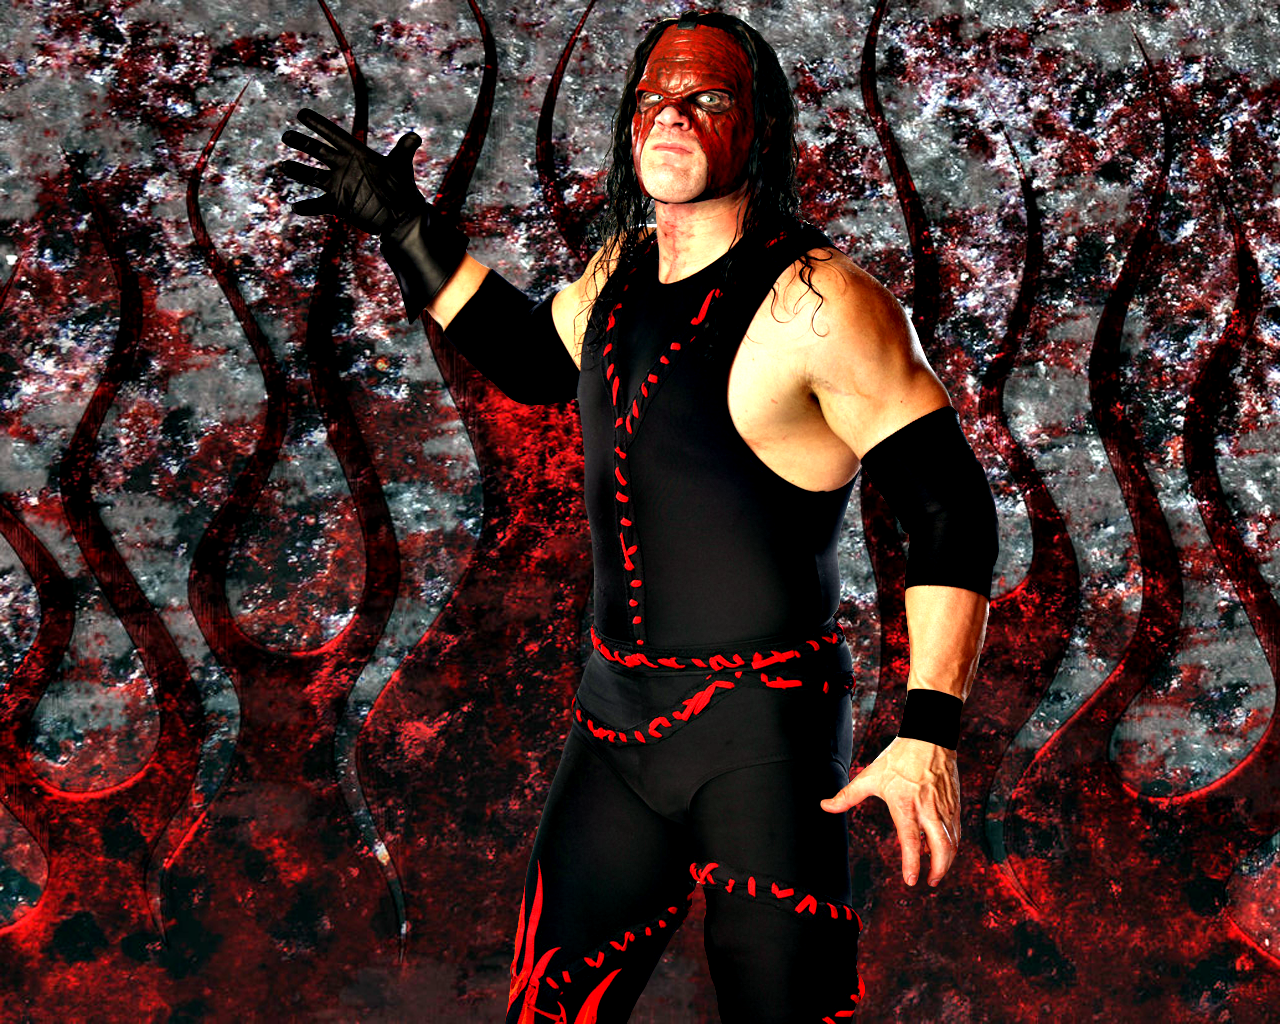 Kane Masked New HD Wallpaper Wrestling